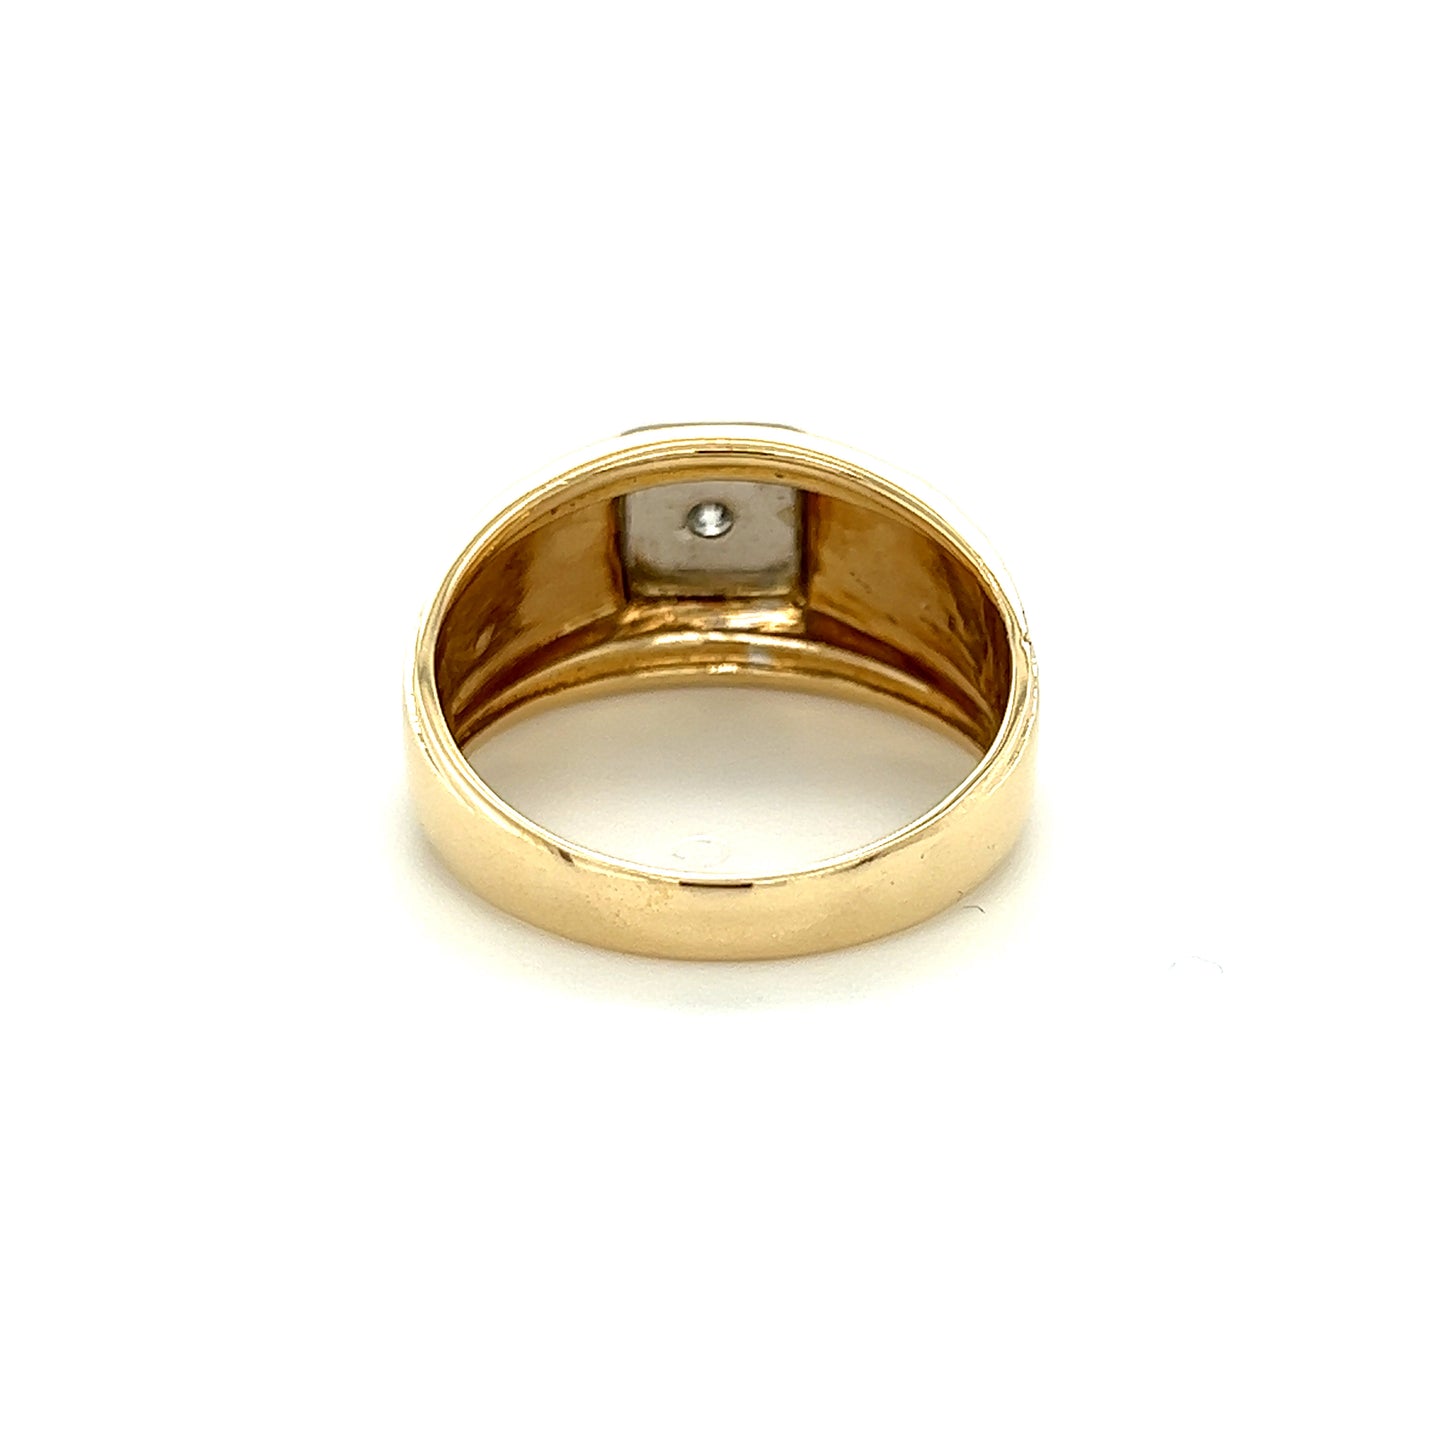 14k Yellow Gold & Diamond Men's Ring .15ctw 6.4g